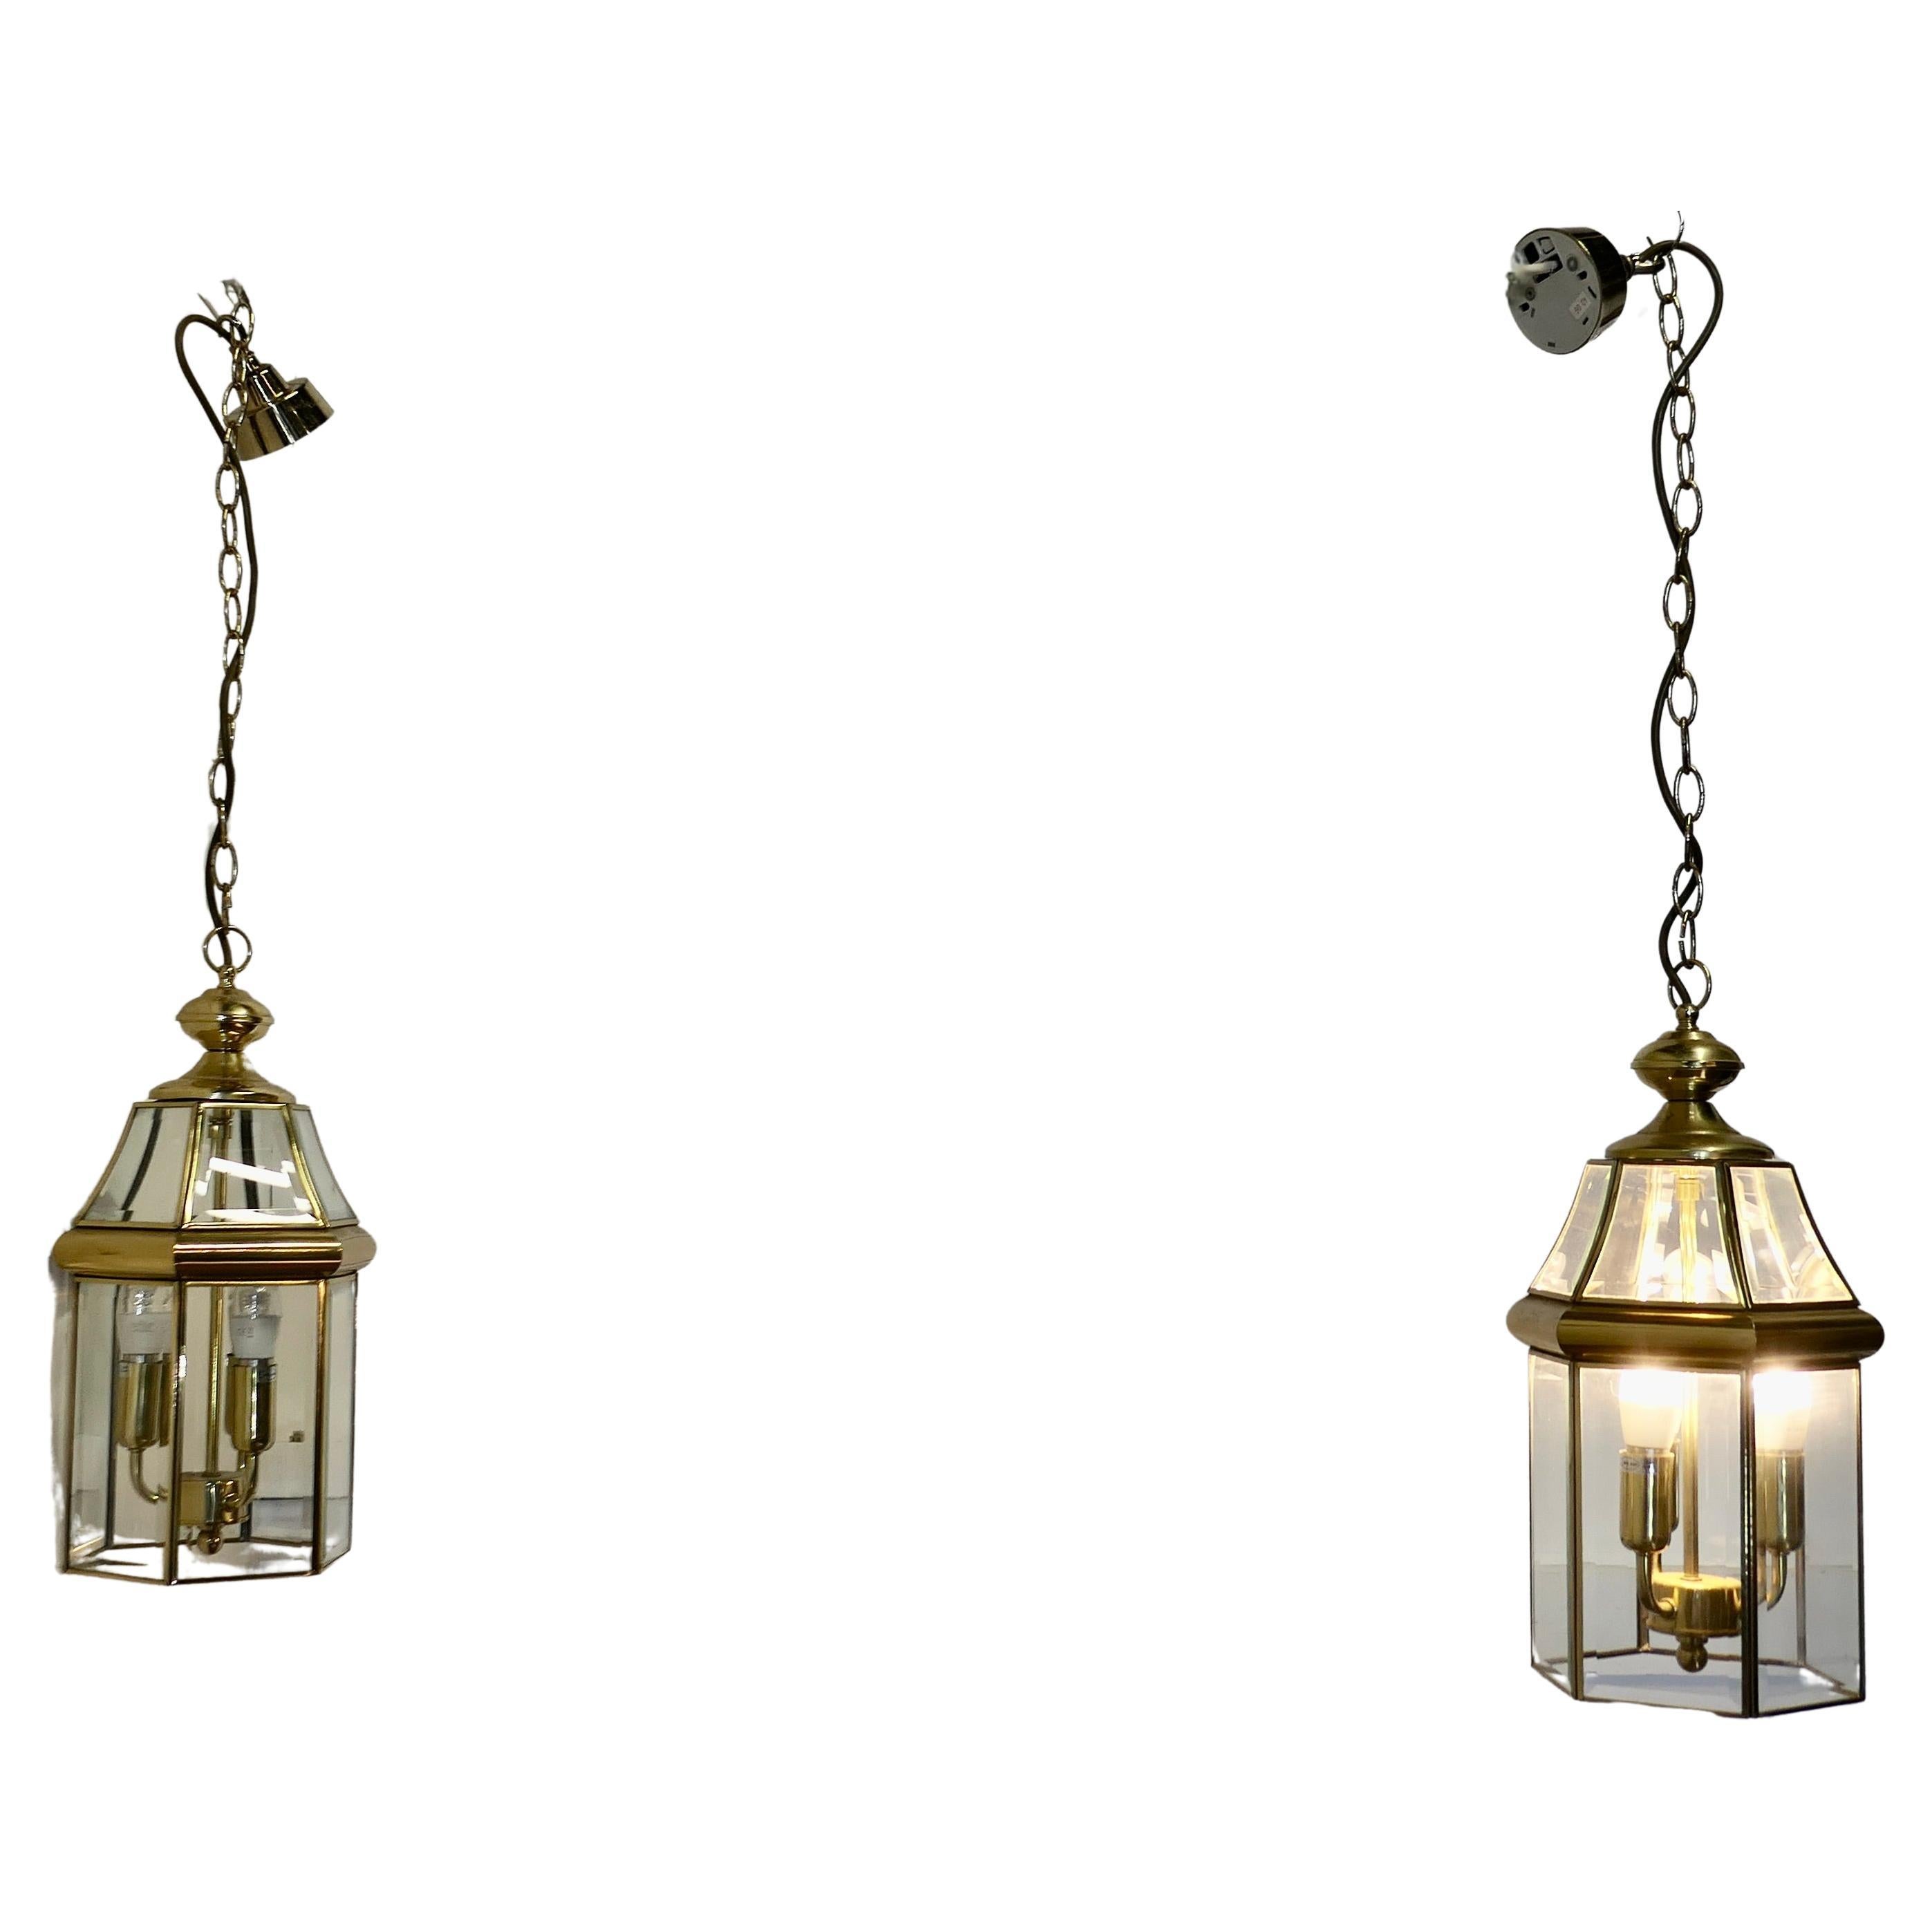 A Pair of  Art Deco Style Brass & Glass Hall Lanterns   